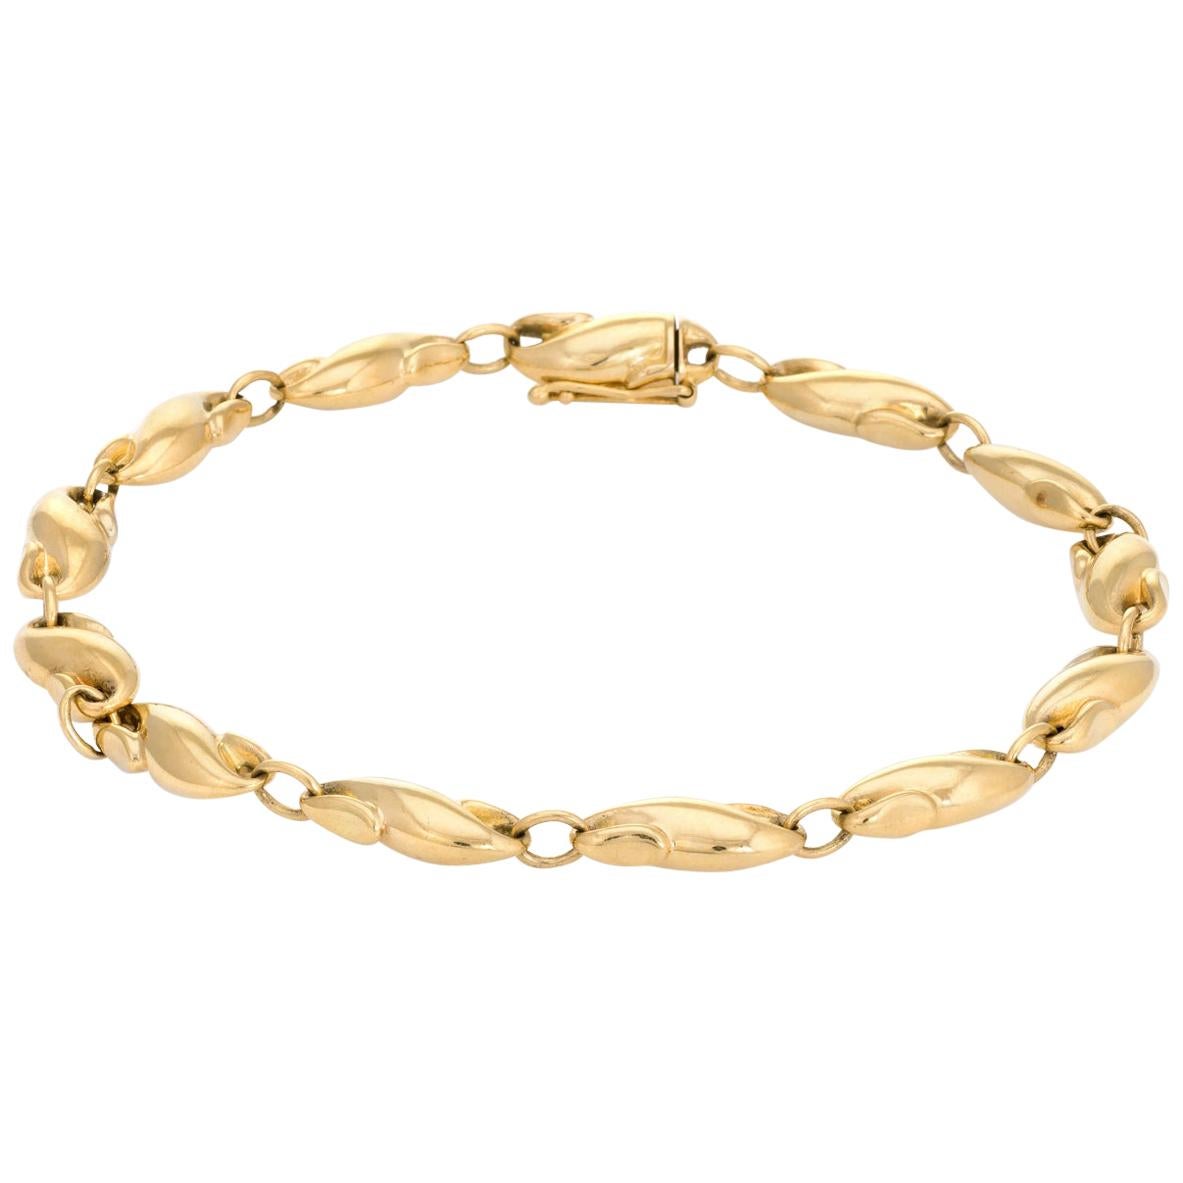 Tiffany & Co. Infinity Link Bracelet Vintage 18 Karat Yellow Gold 1990s Peretti